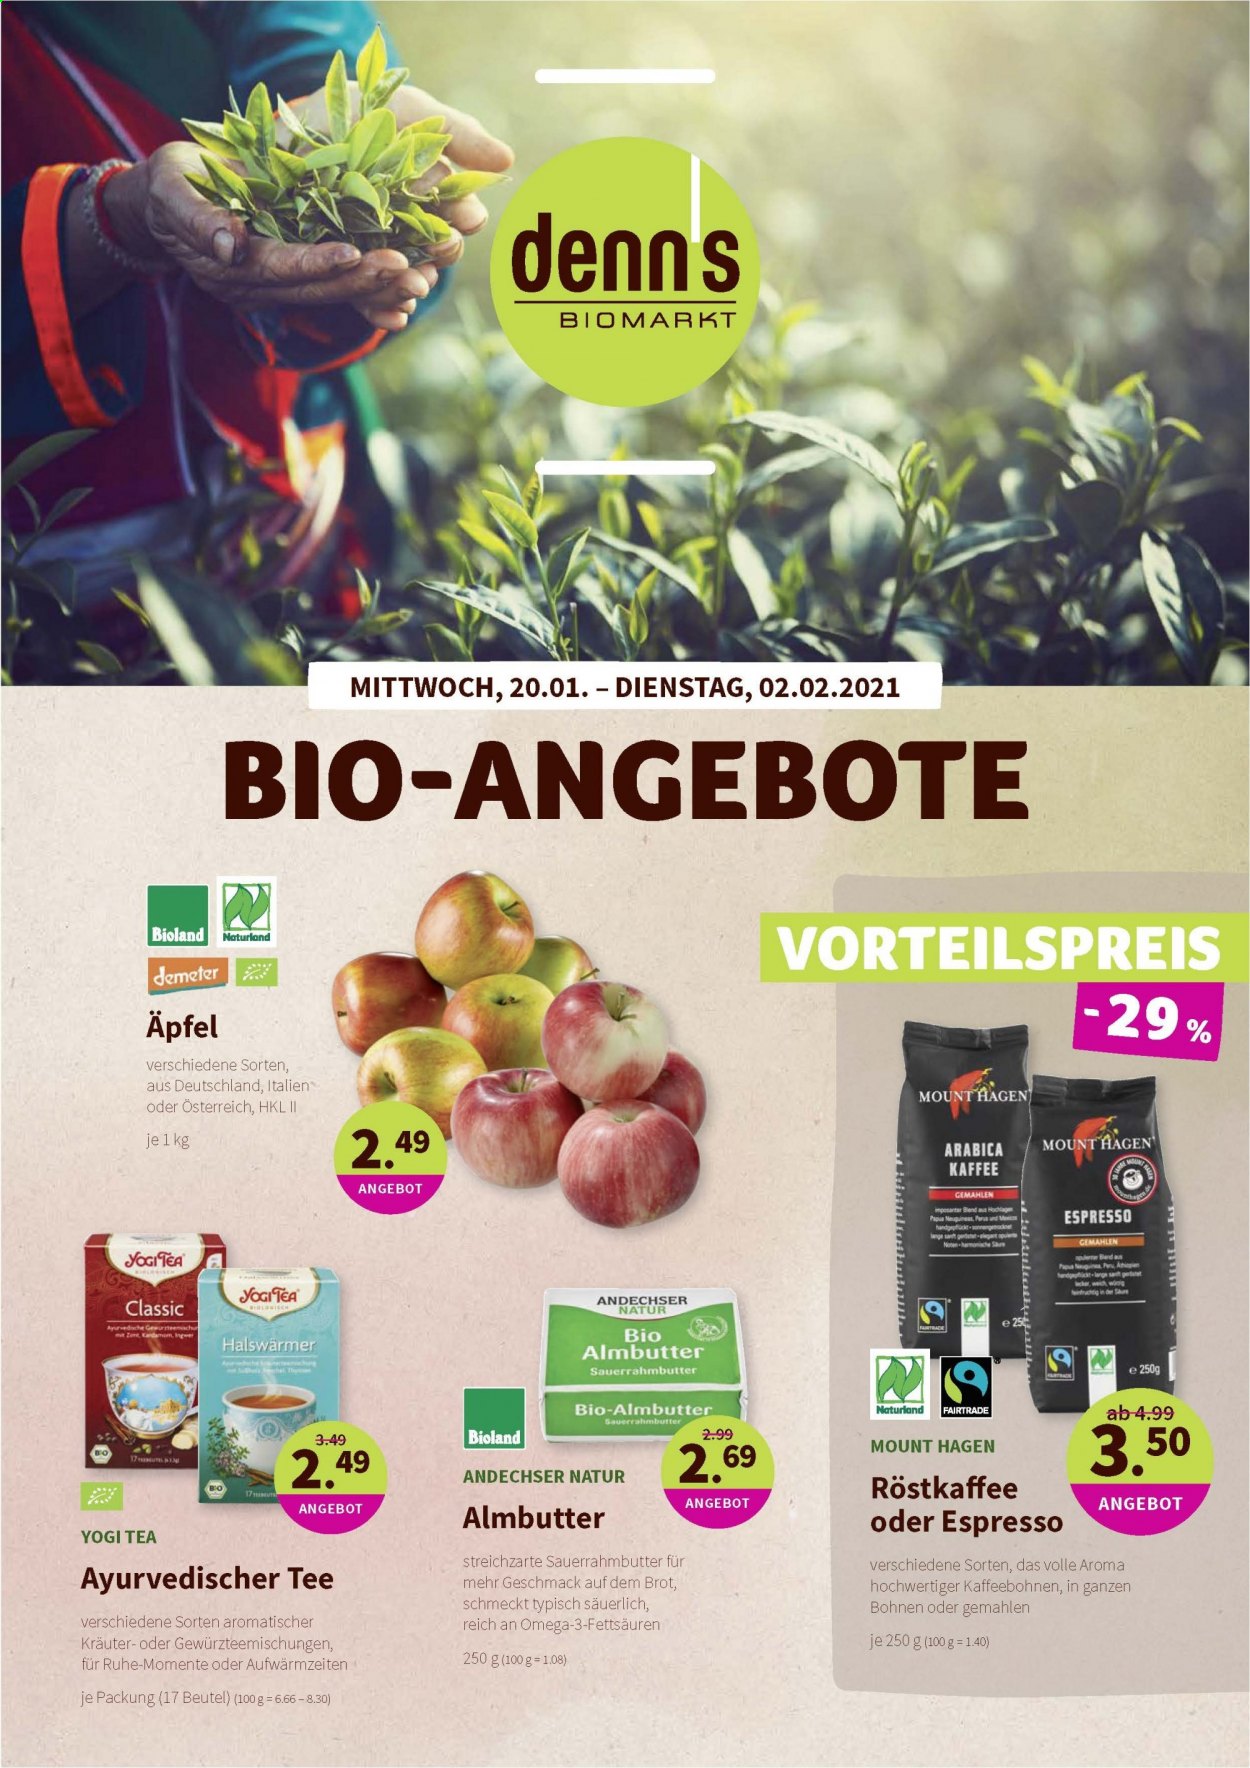 thumbnail - Prospekte BioMarkt - 20.01.2021 - 2.02.2021 - Produkte in Aktion - Brot, Bohnen, Kräuter, Tee, Kaffee, Espresso, Omega-3. Seite 1.